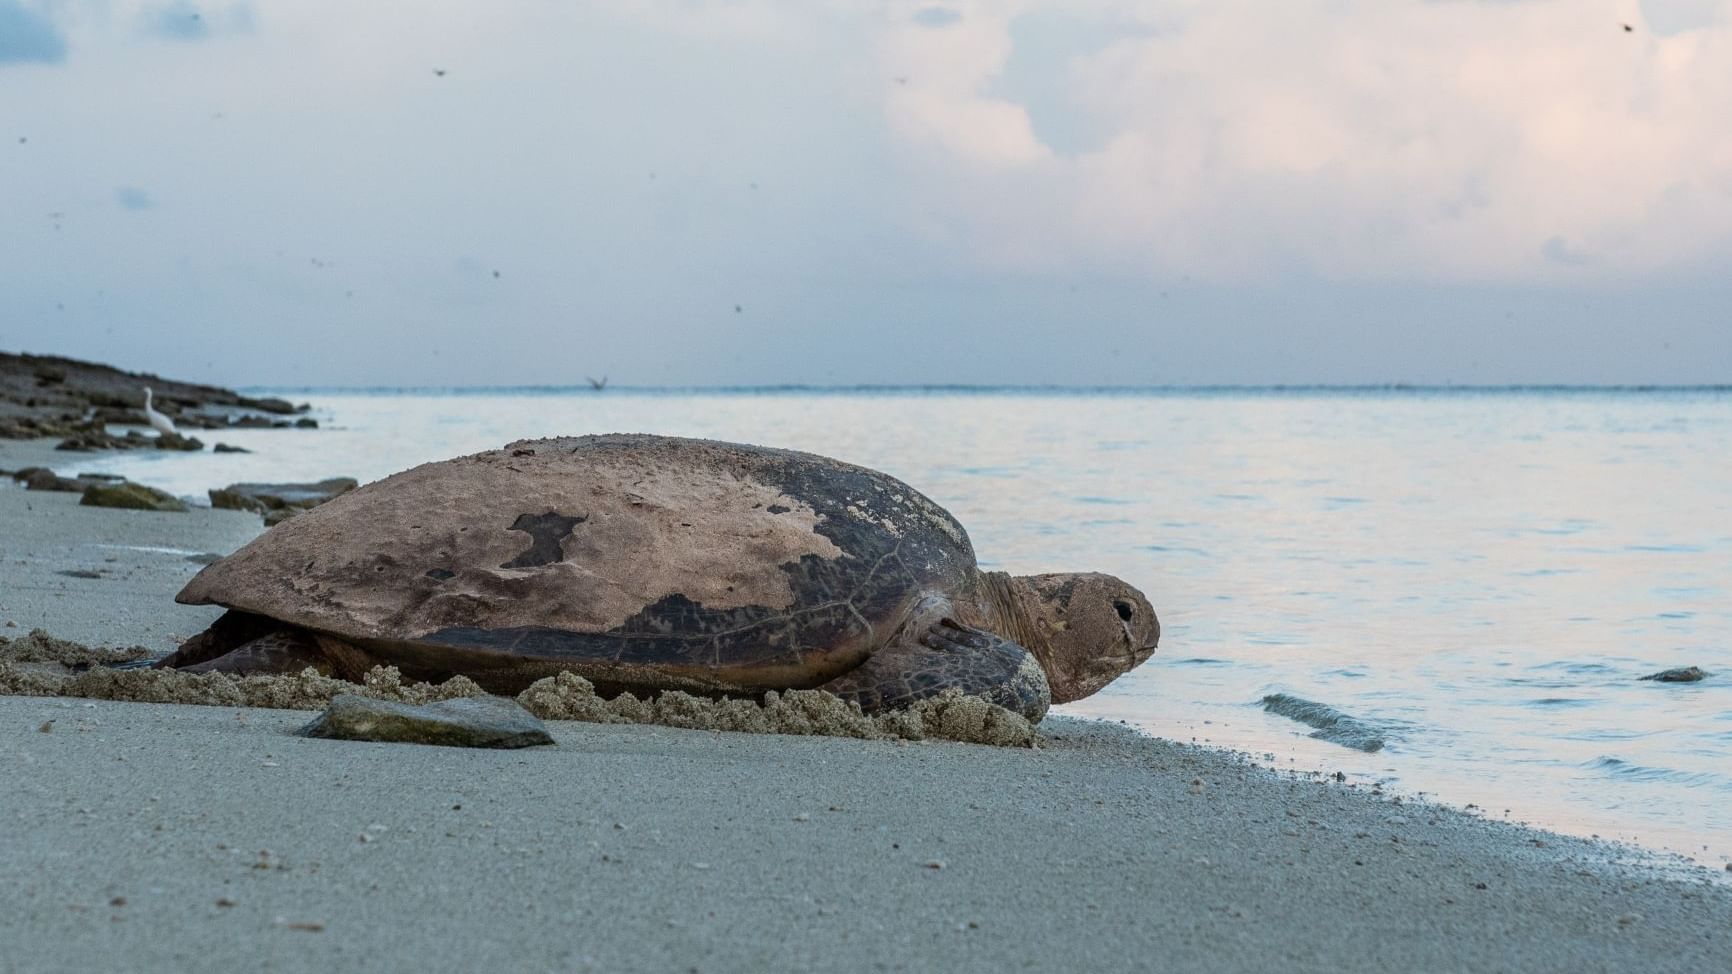 A turtle walking towards the sea near Heron Island Resort